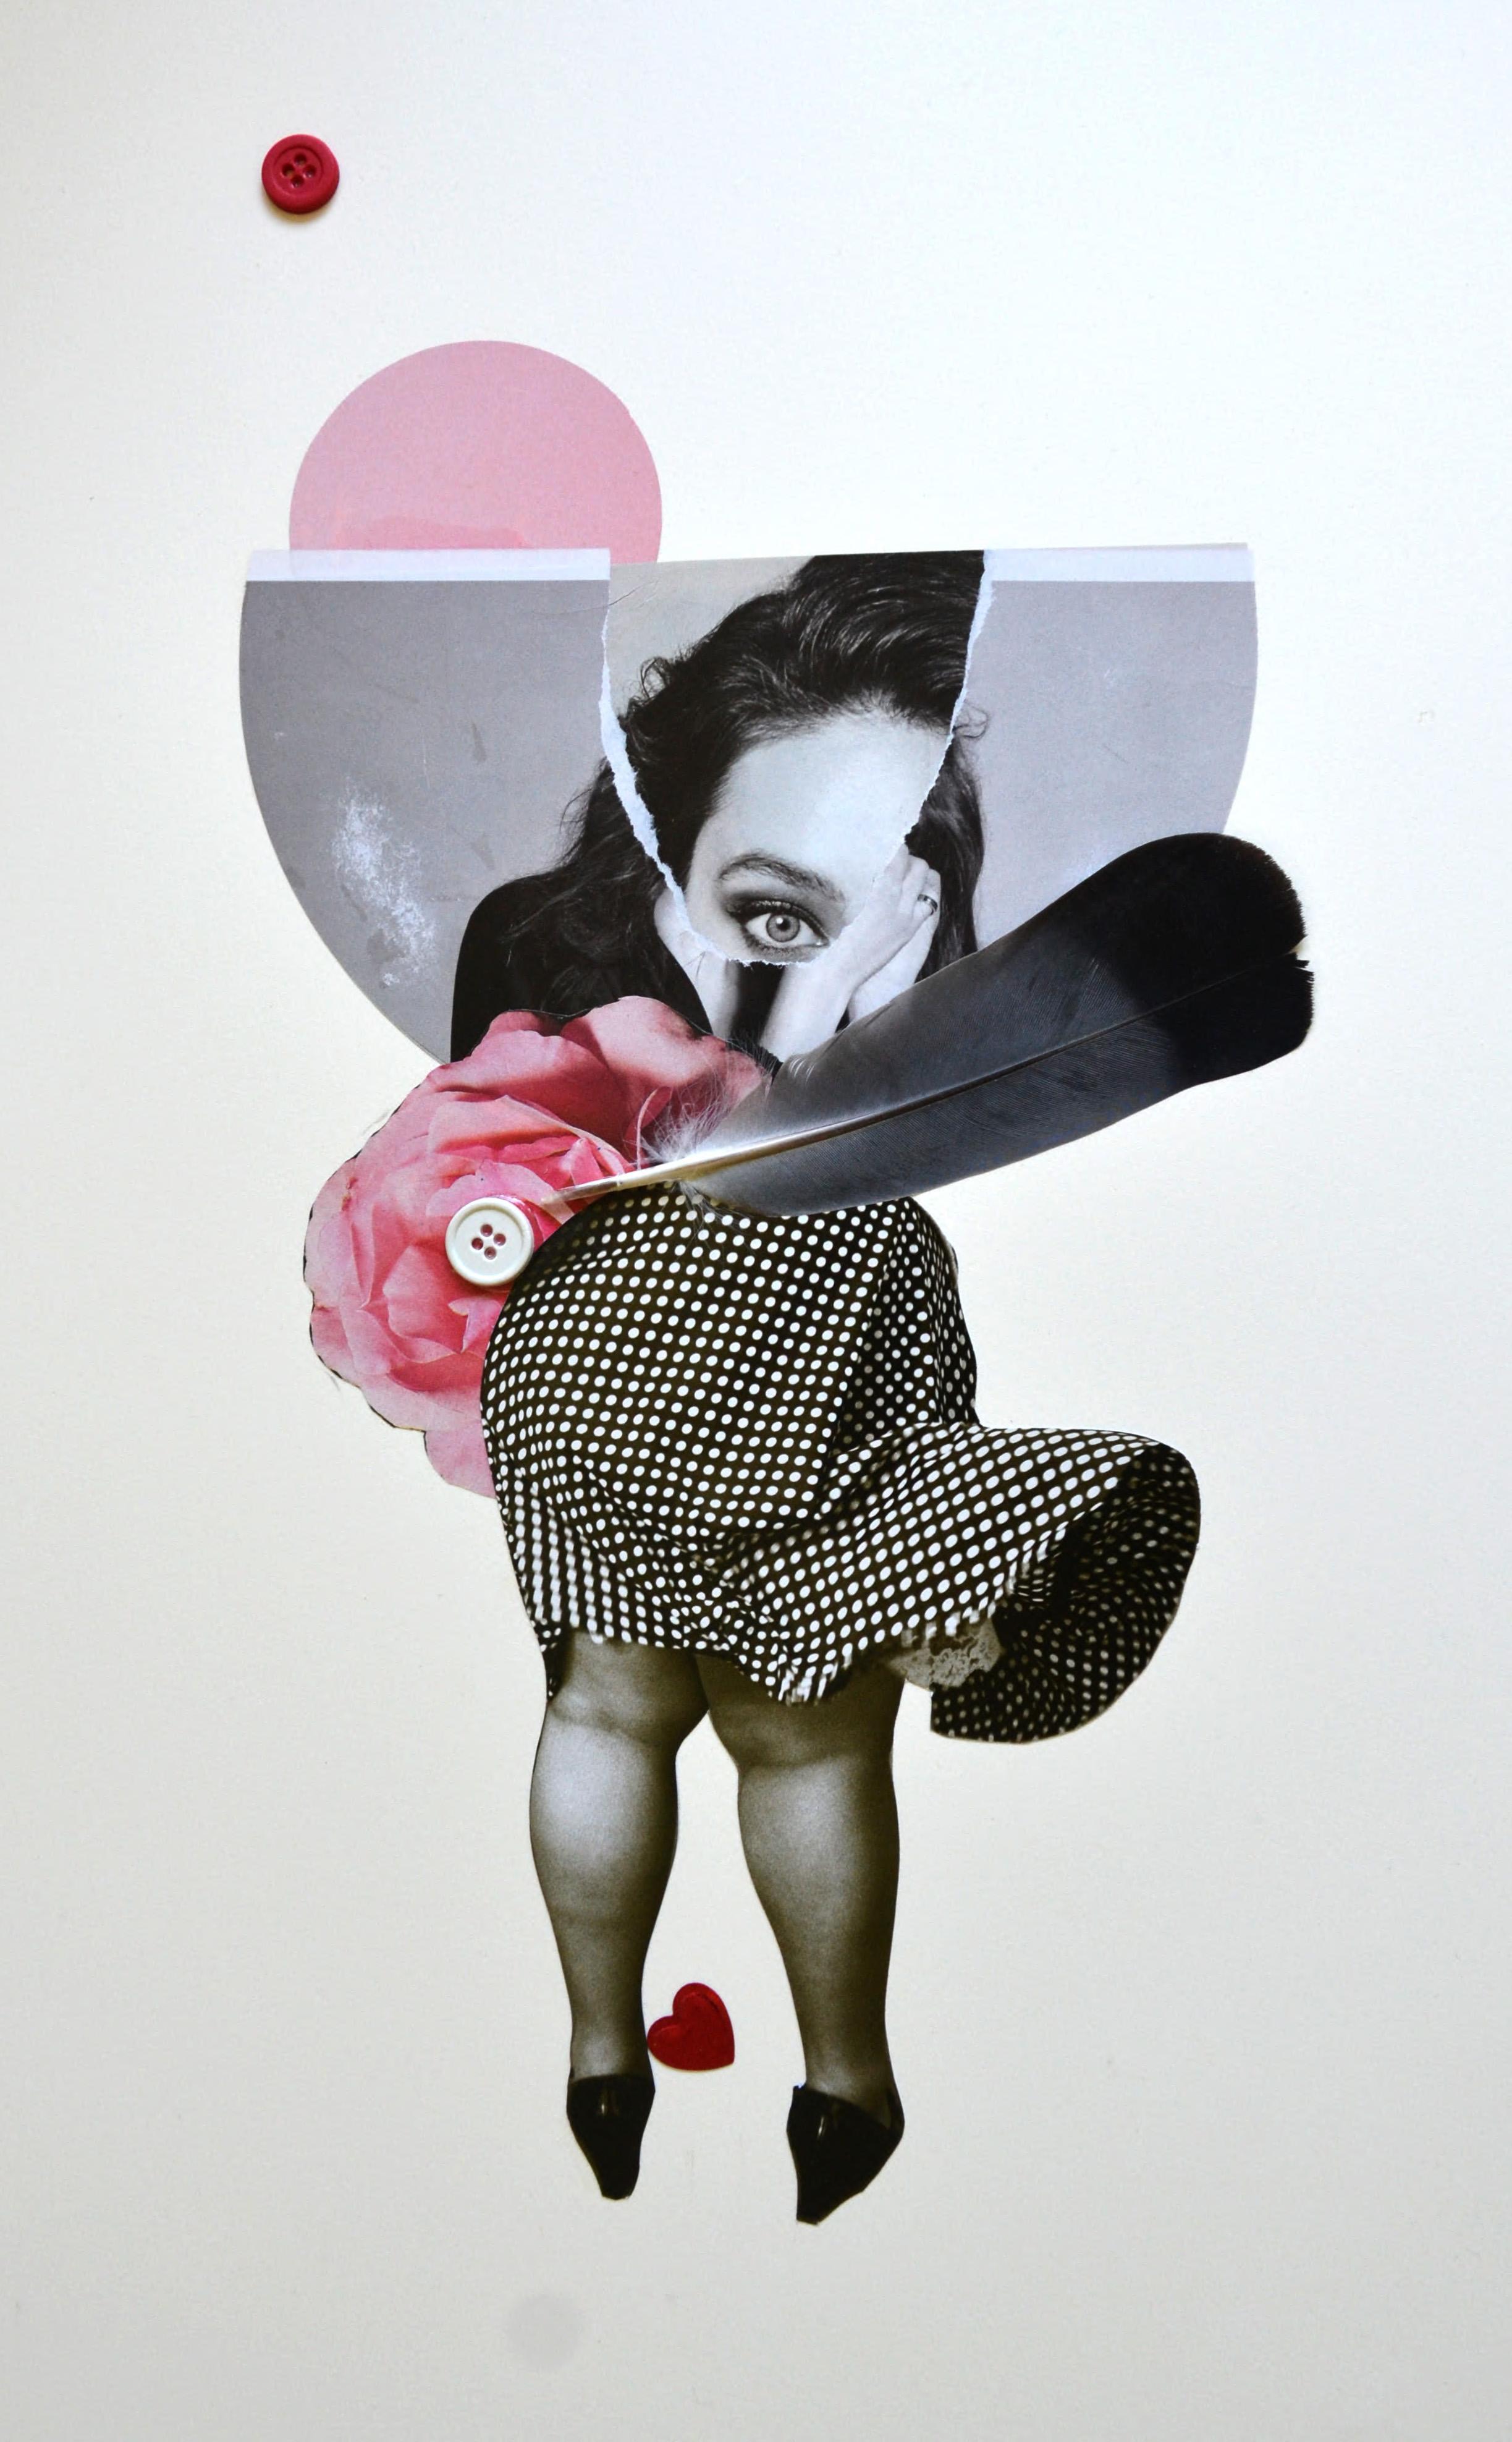 Dance Girl : contemporary collage - Mixed Media Art by Paul Antonio Szabo